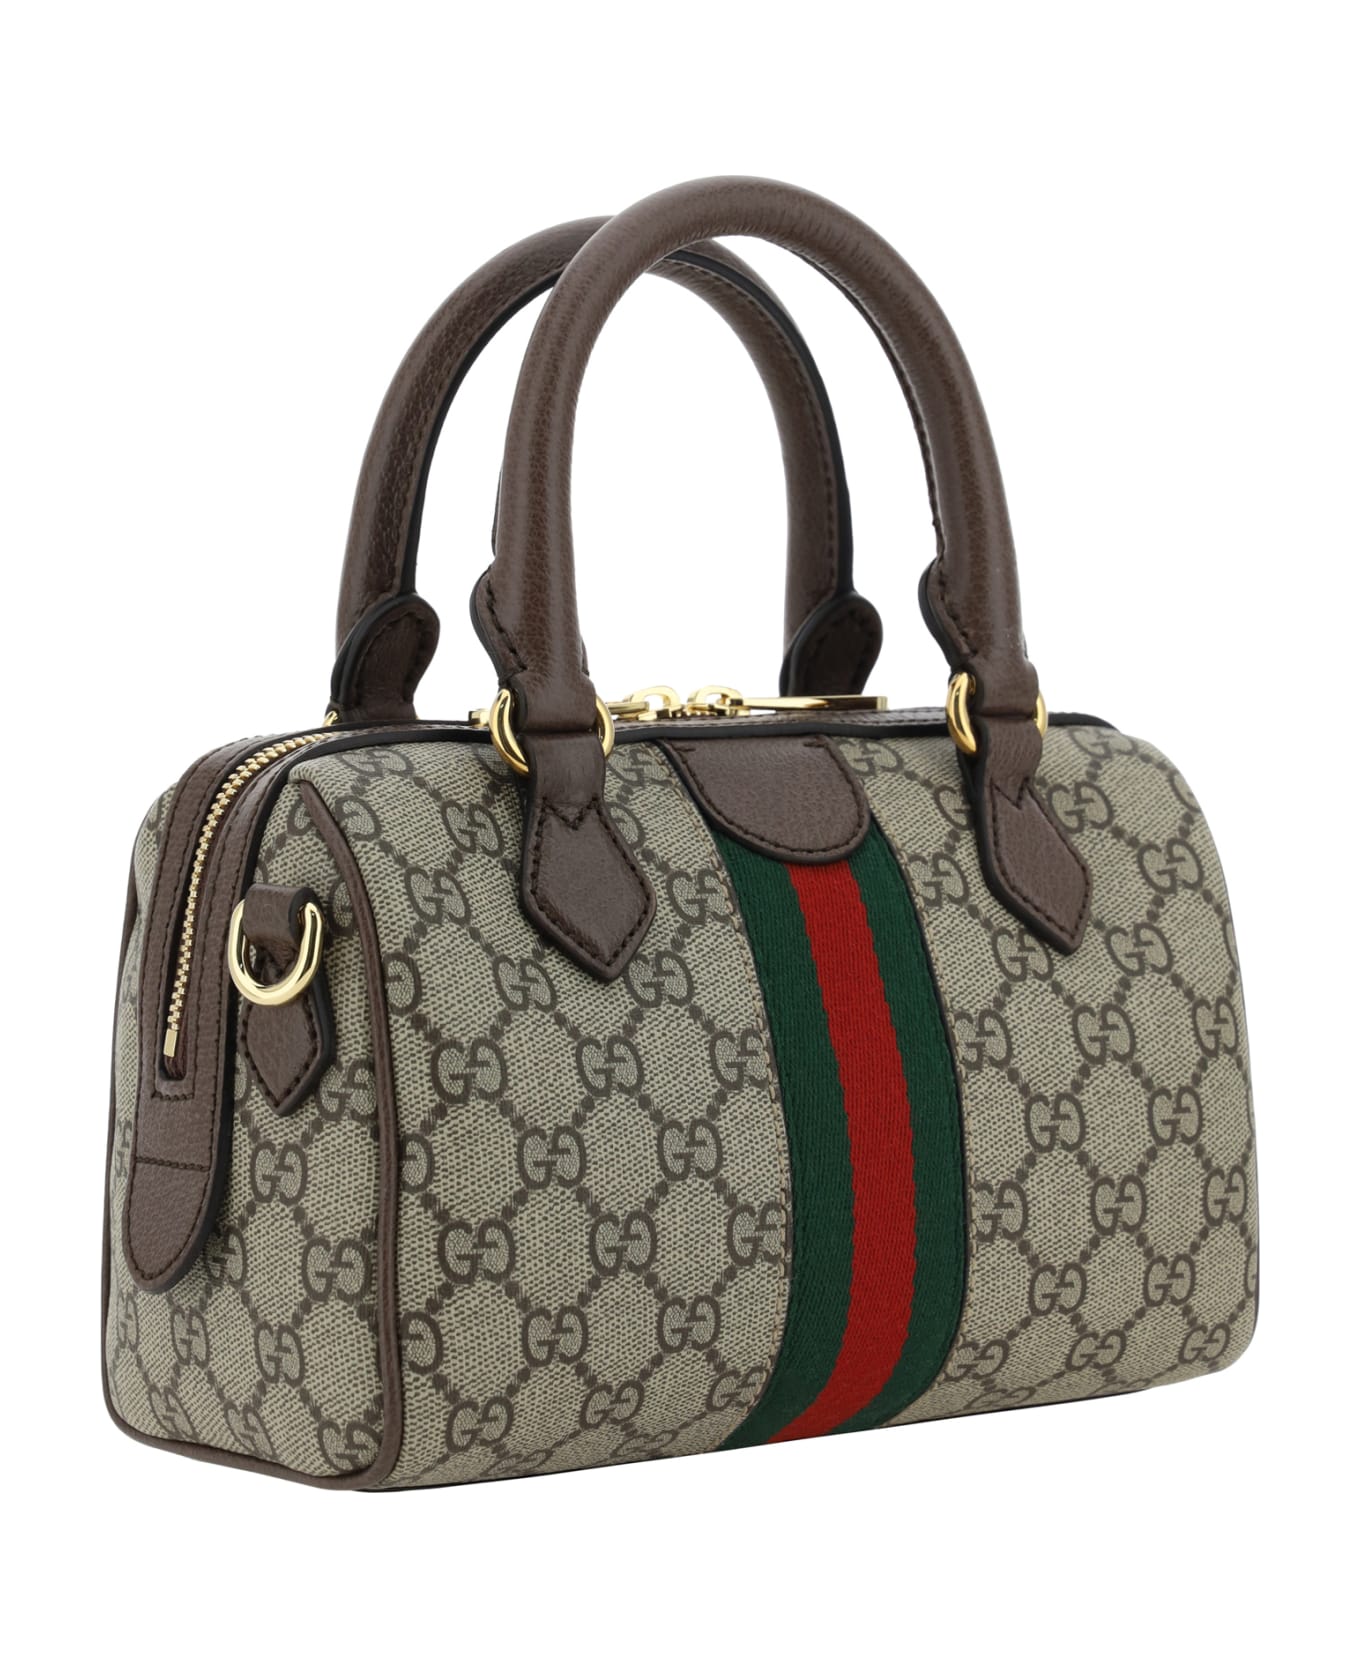 Gucci Ophidia Handbag - Ebony/acero トートバッグ